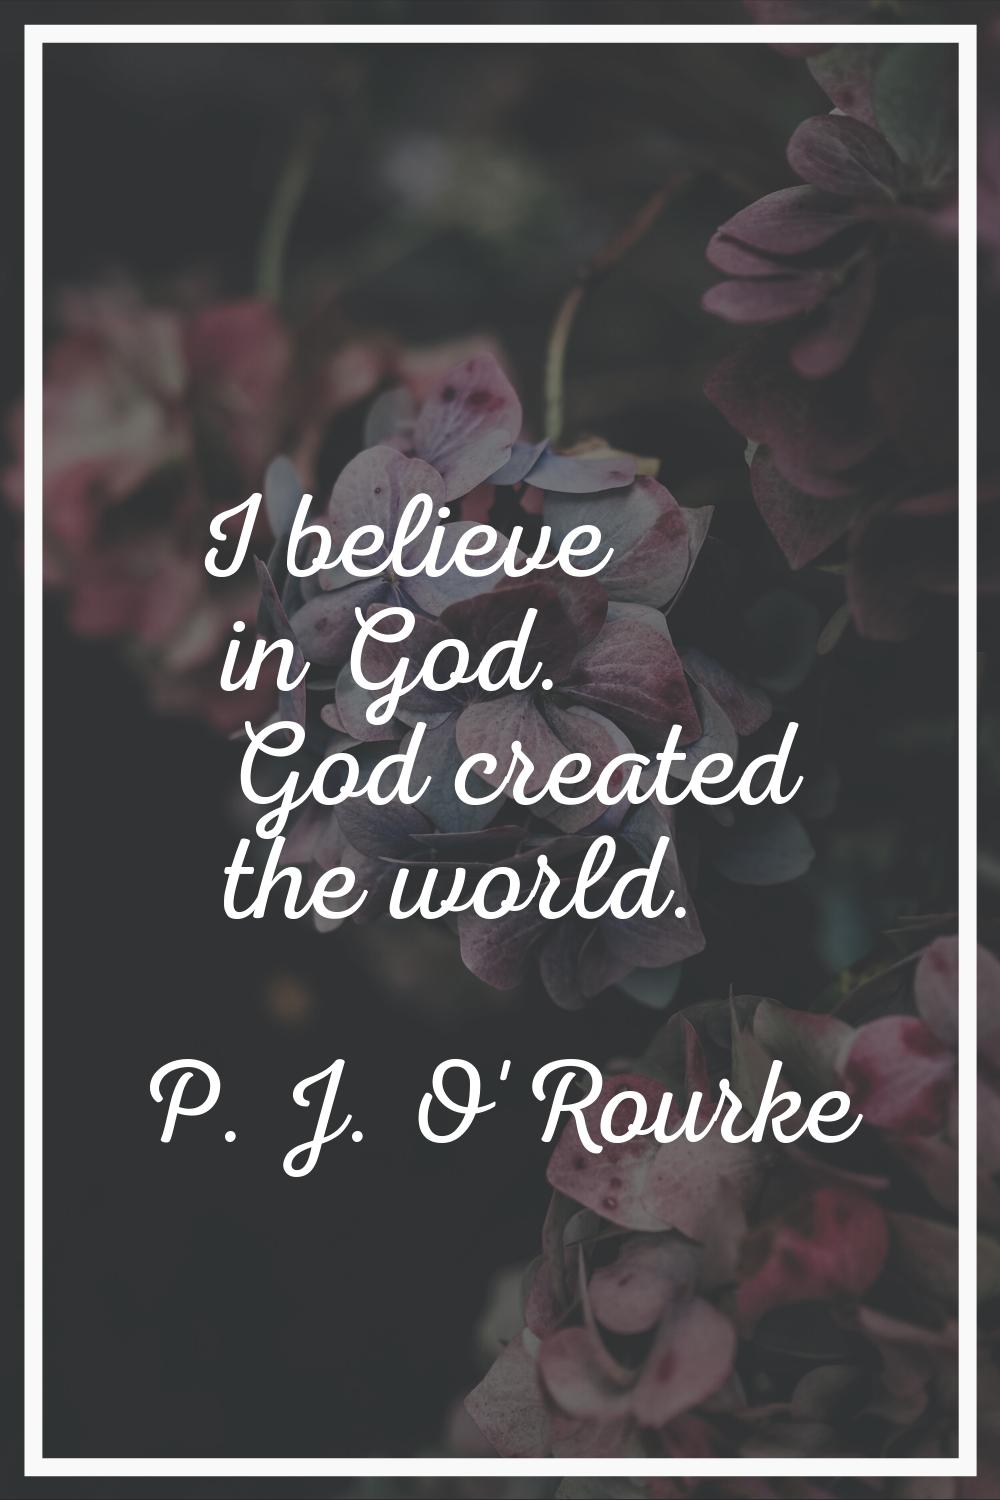 I believe in God. God created the world.